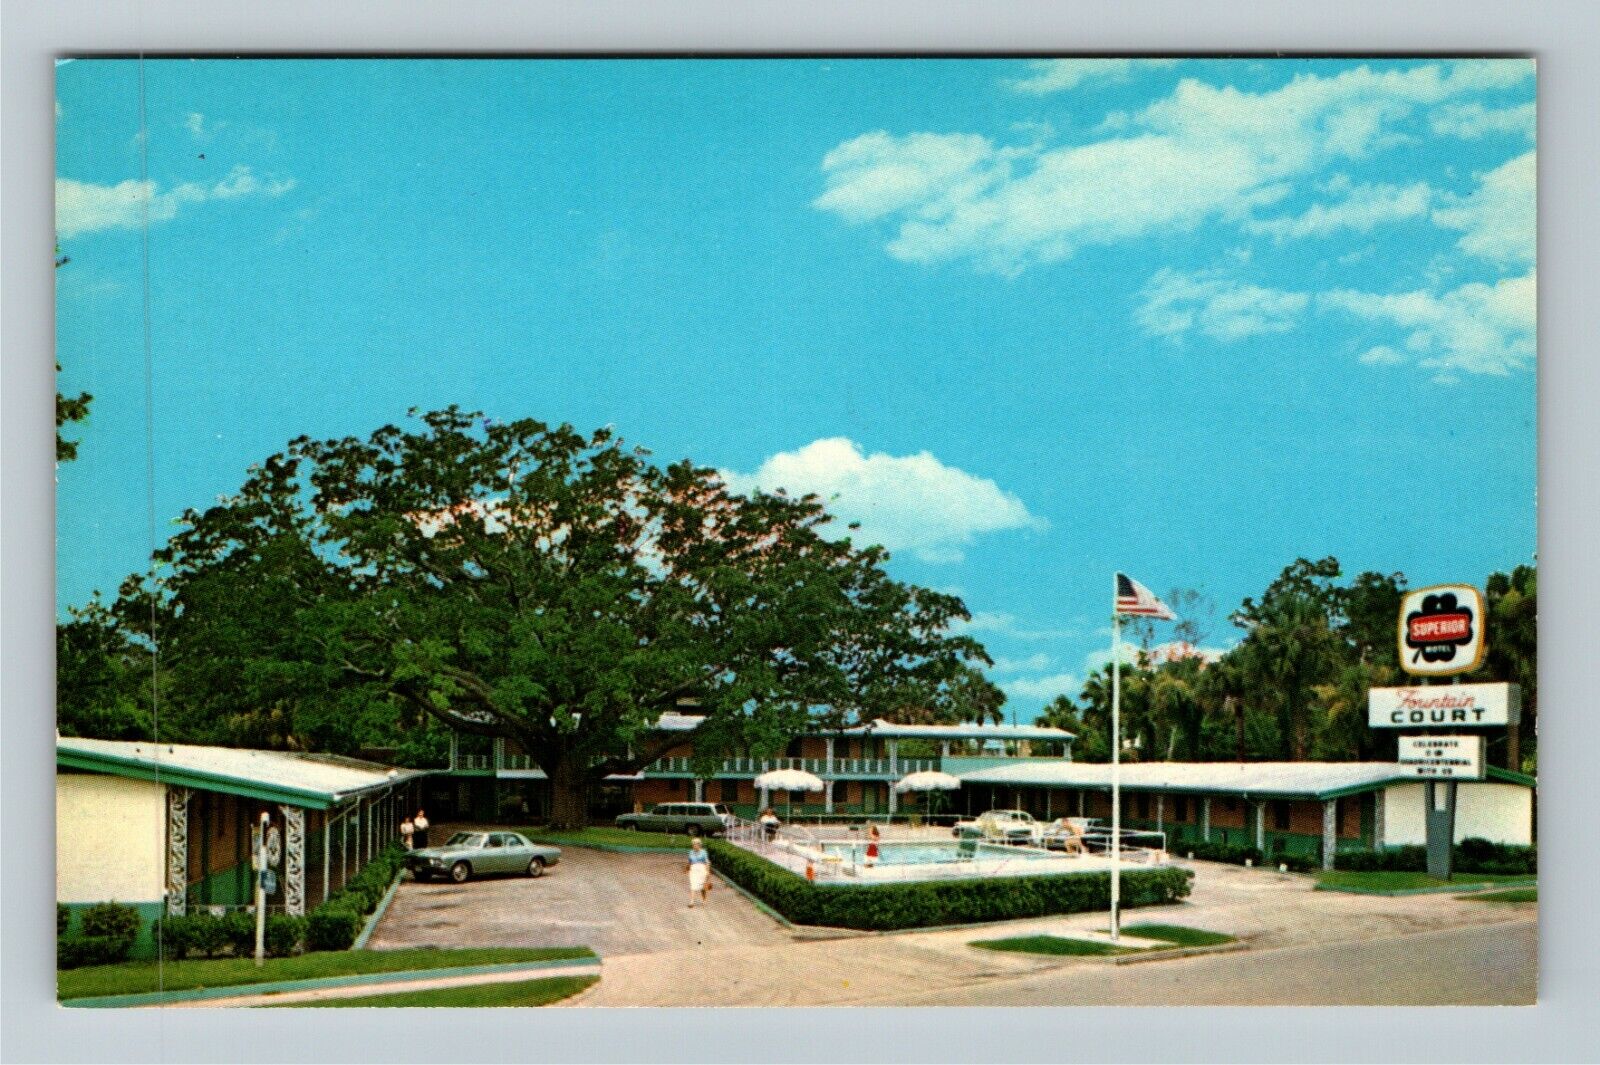 St Augustine FL-Florida, Fountain Court, Vintage Postcard